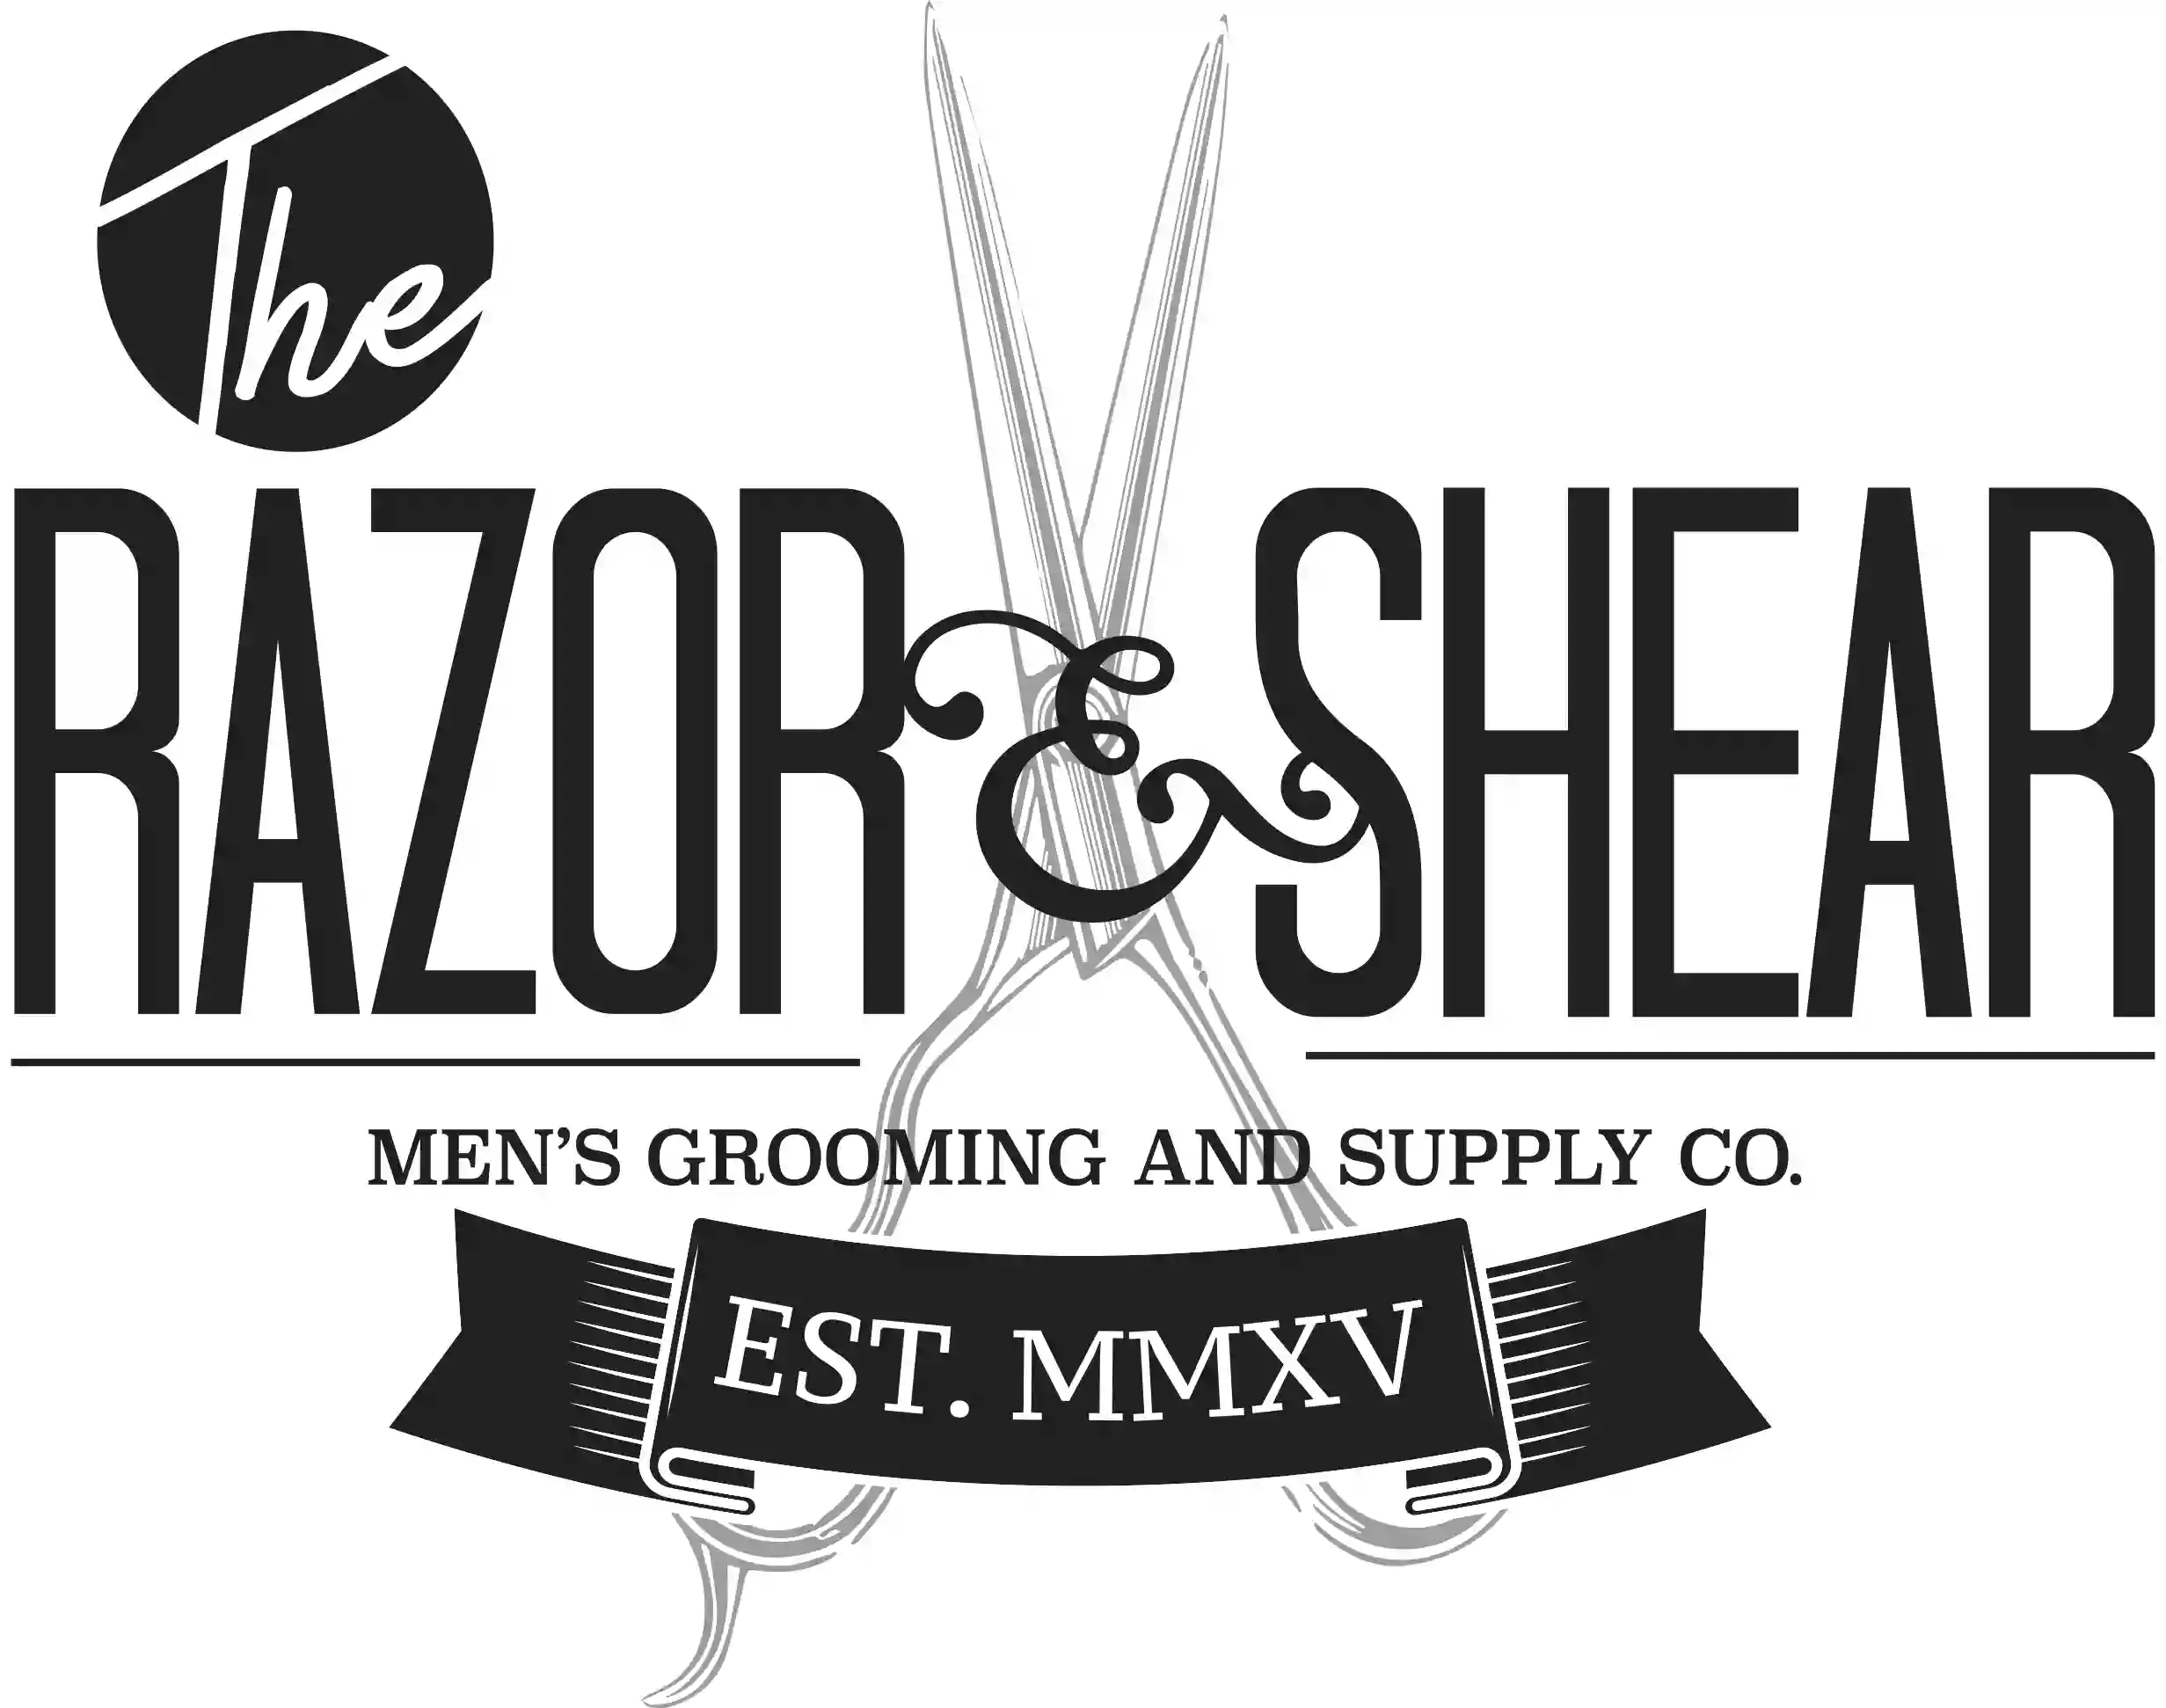 The Razor and Shear